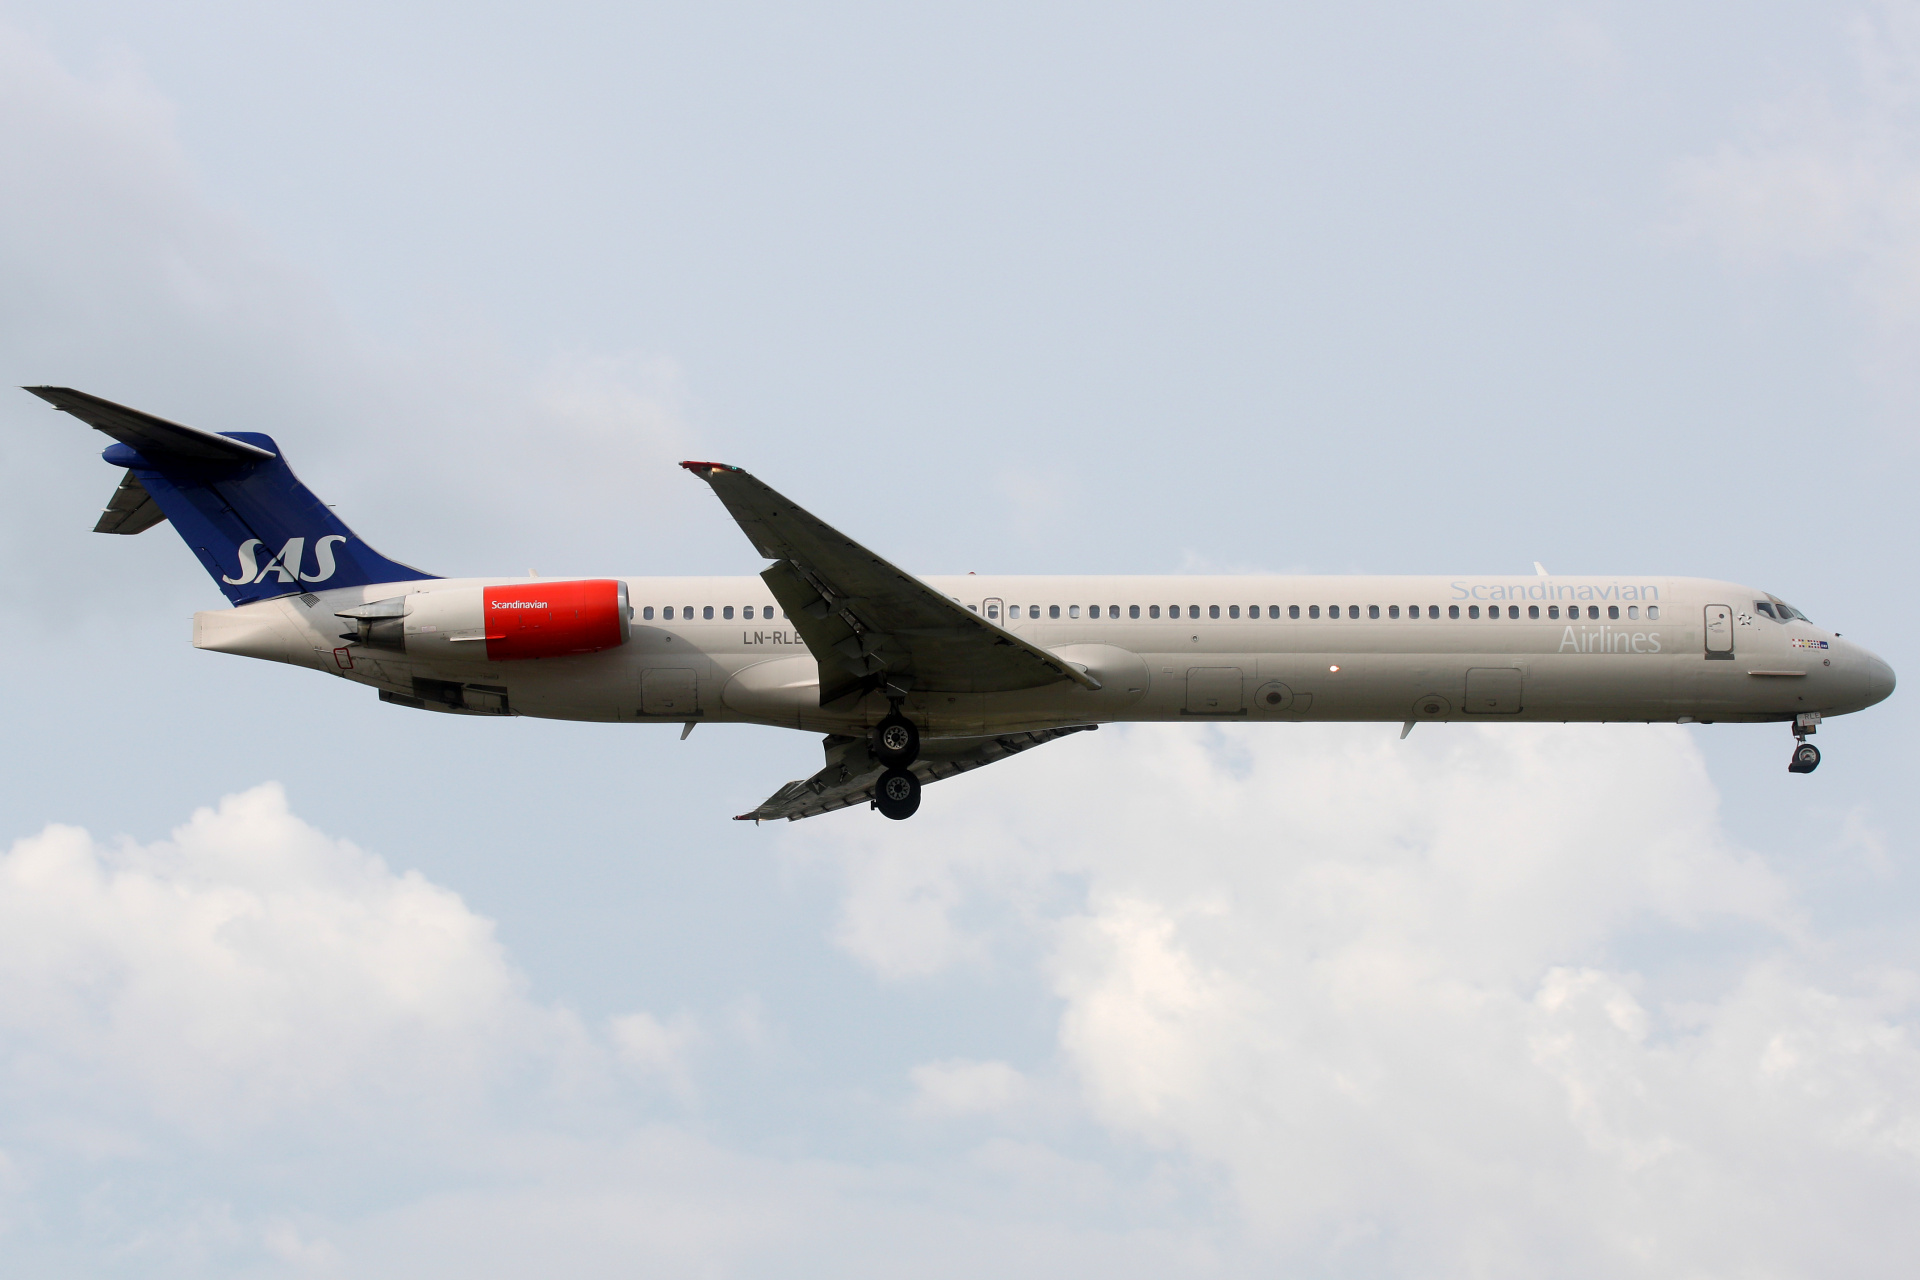 LN-RLE (Aircraft » EPWA Spotting » McDonnell Douglas MD-82 » SAS Scandinavian Airlines)